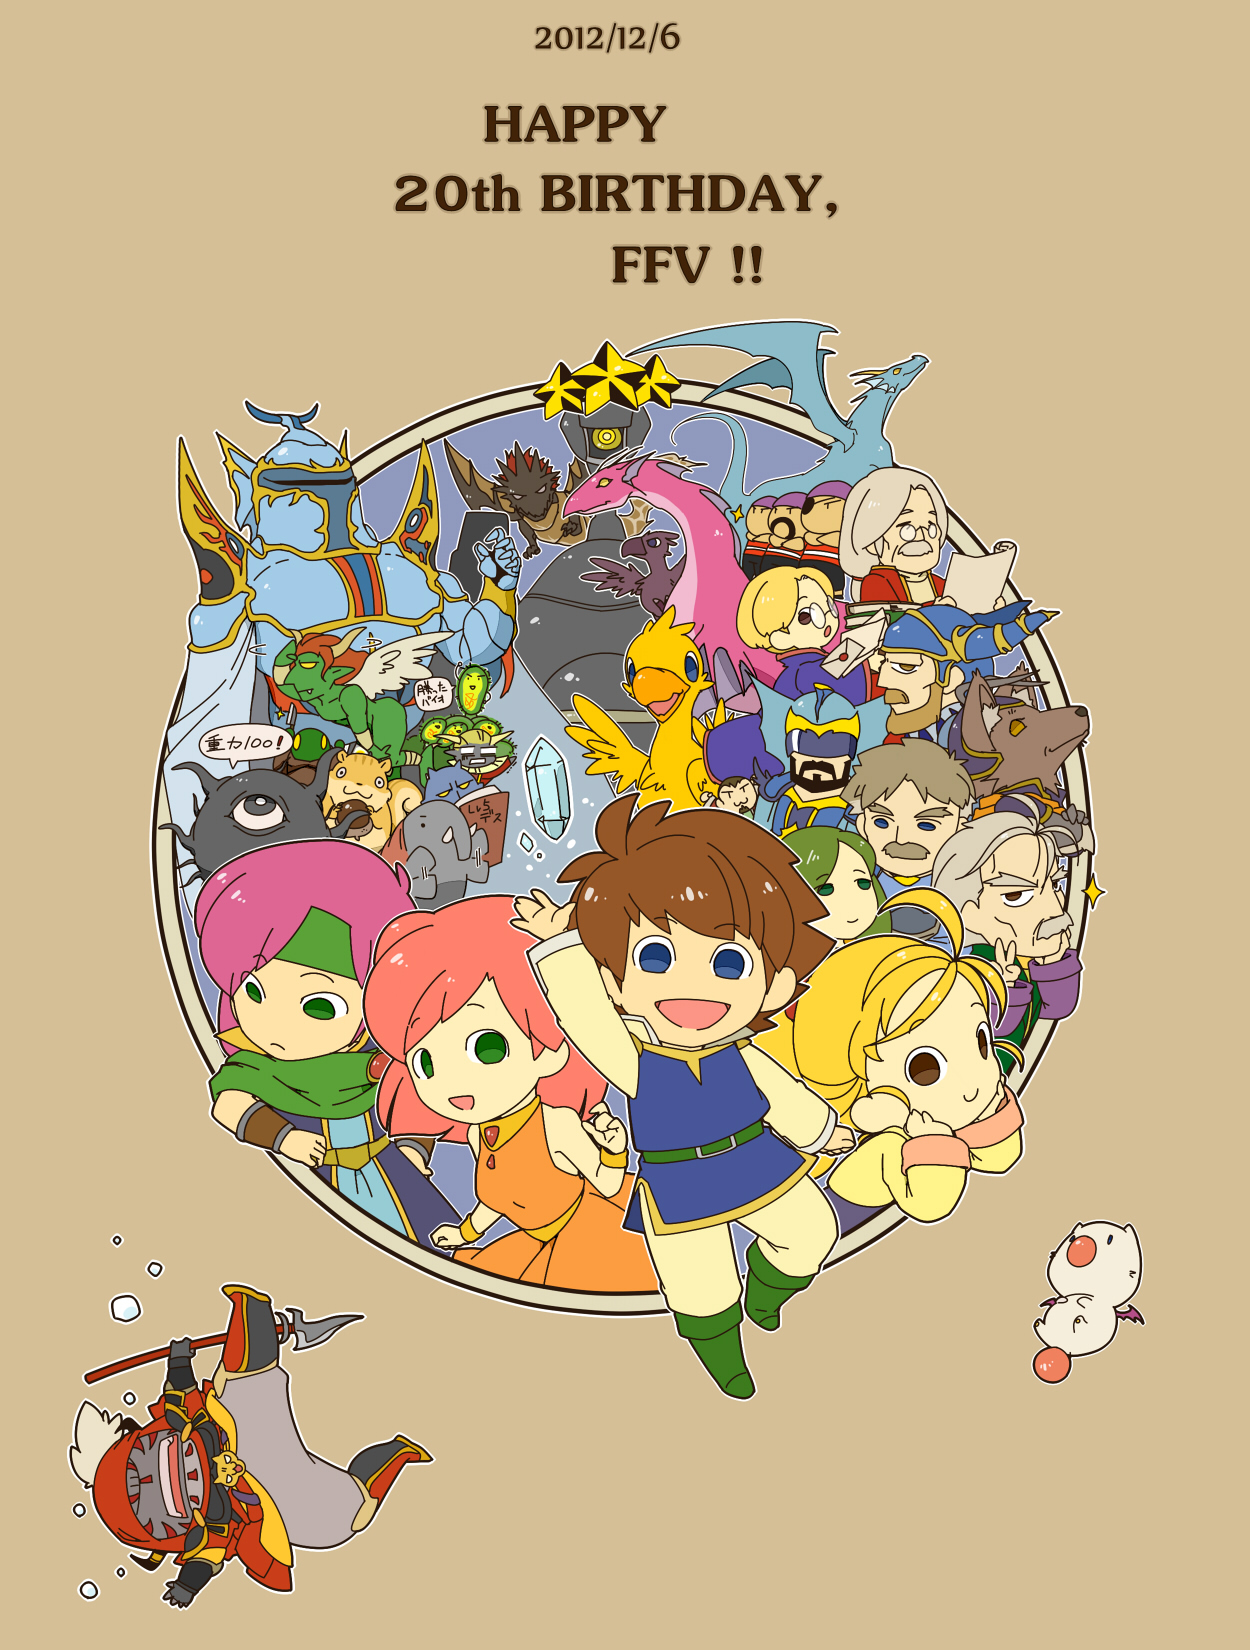 Final Fantasy V Wallpapers Video Game Hq Final Fantasy V Pictures 4k Wallpapers 19